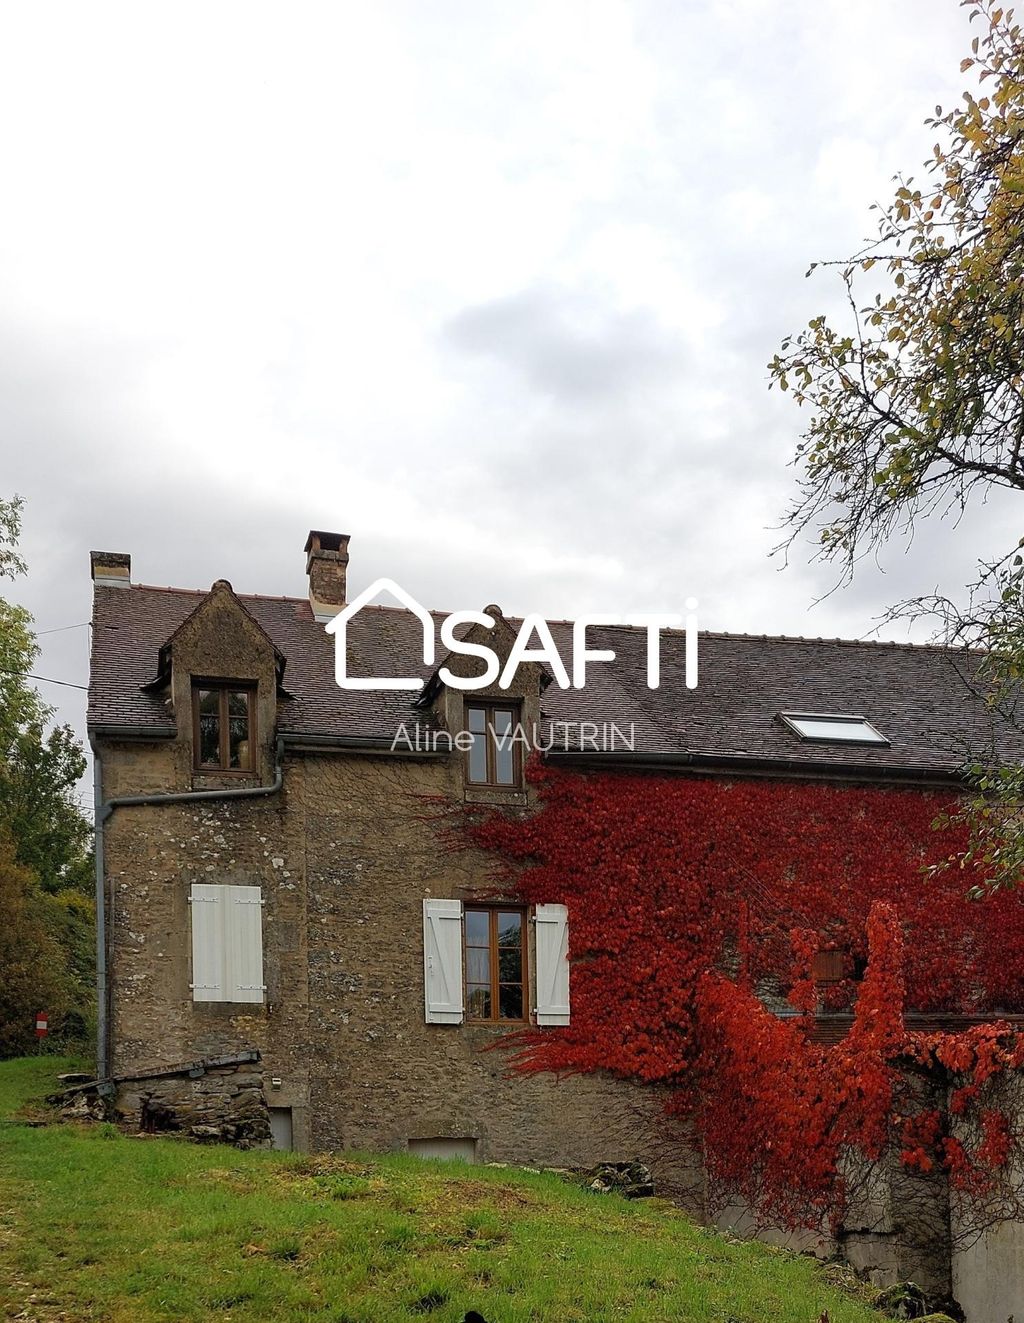 Achat maison à vendre 3 chambres 81 m² - Saint-Seine-l'Abbaye